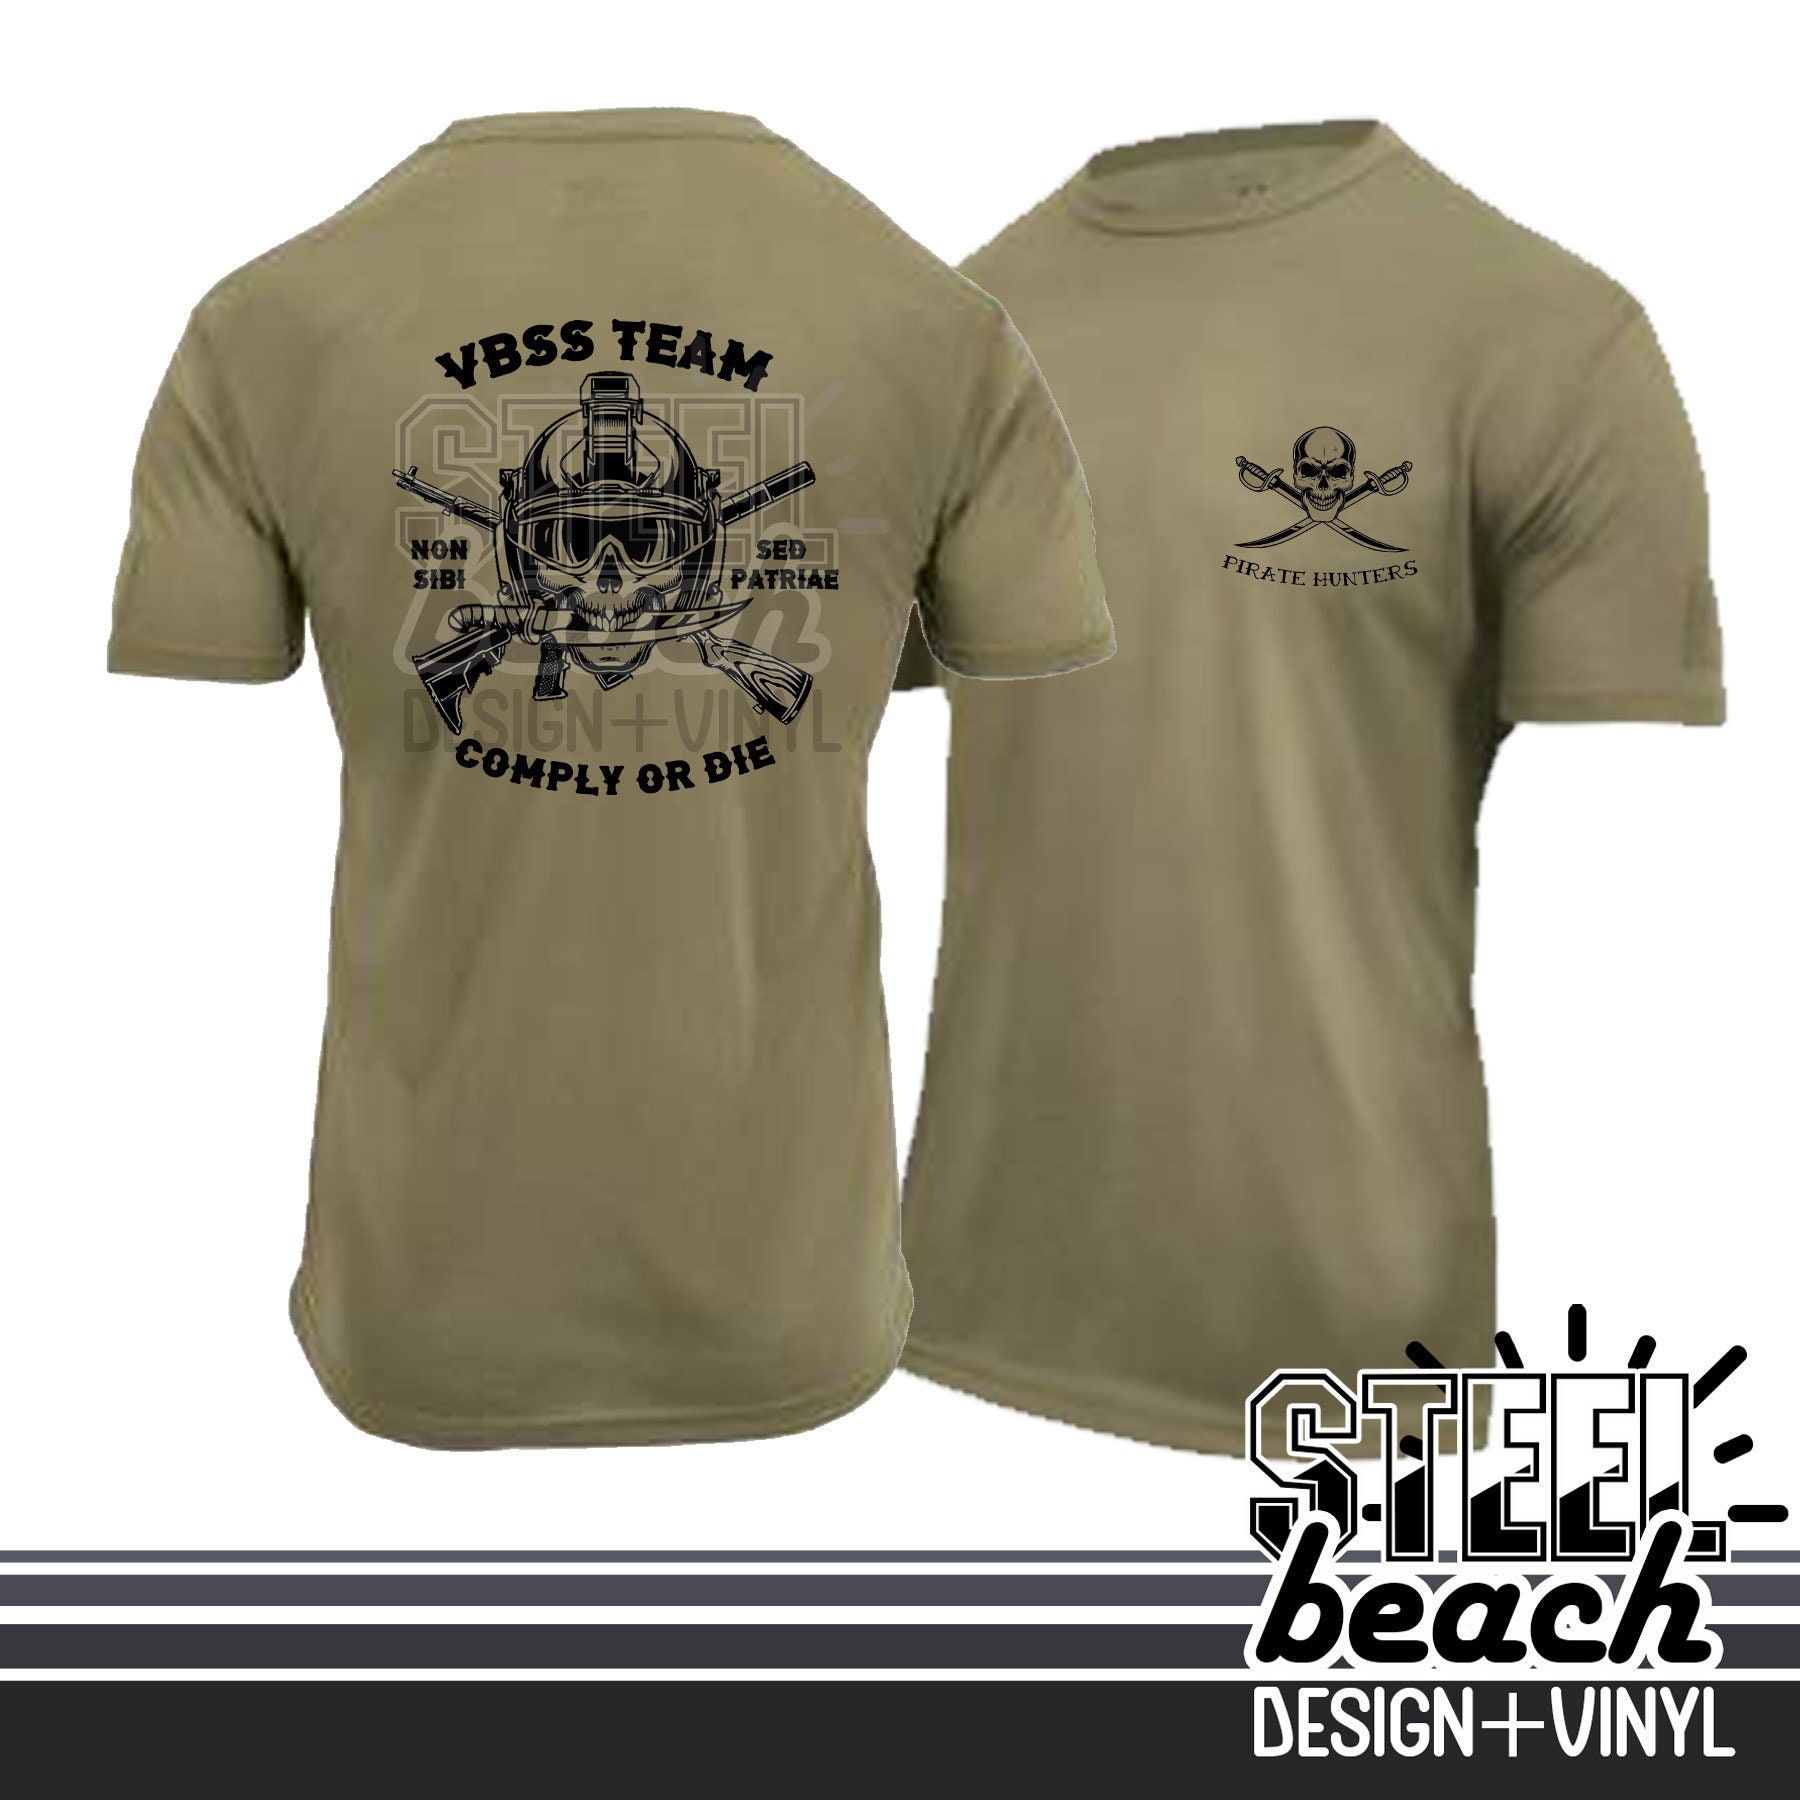 Navy VBSS Team Pirate Hunters Coyote Brown Military Uniform Shirt